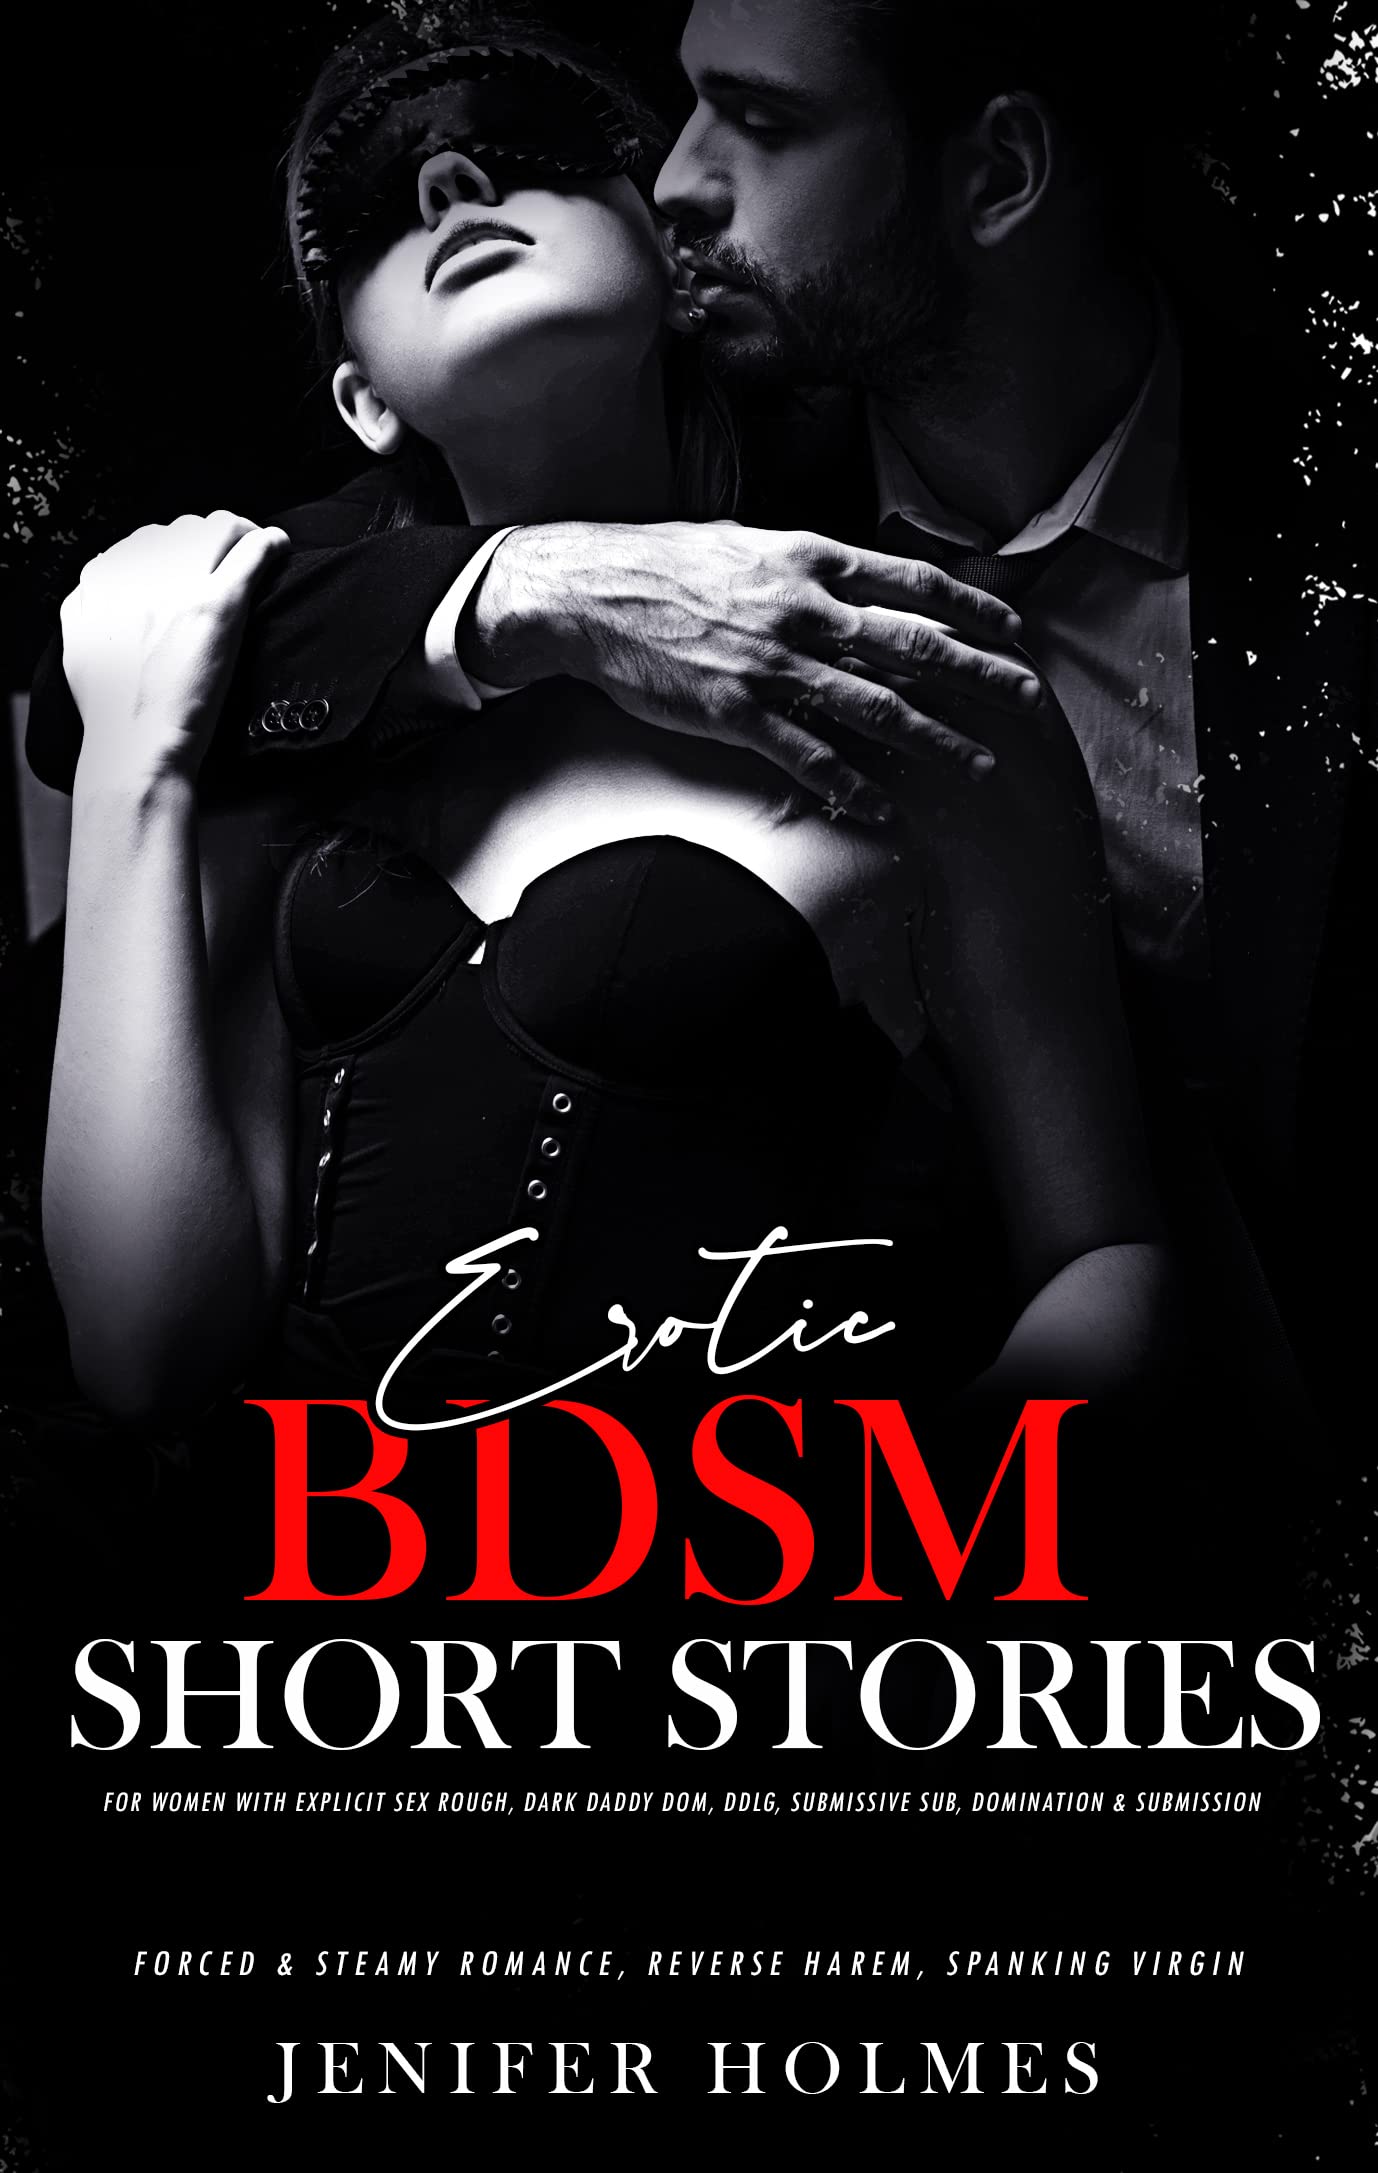 Best of Bdsm short stories